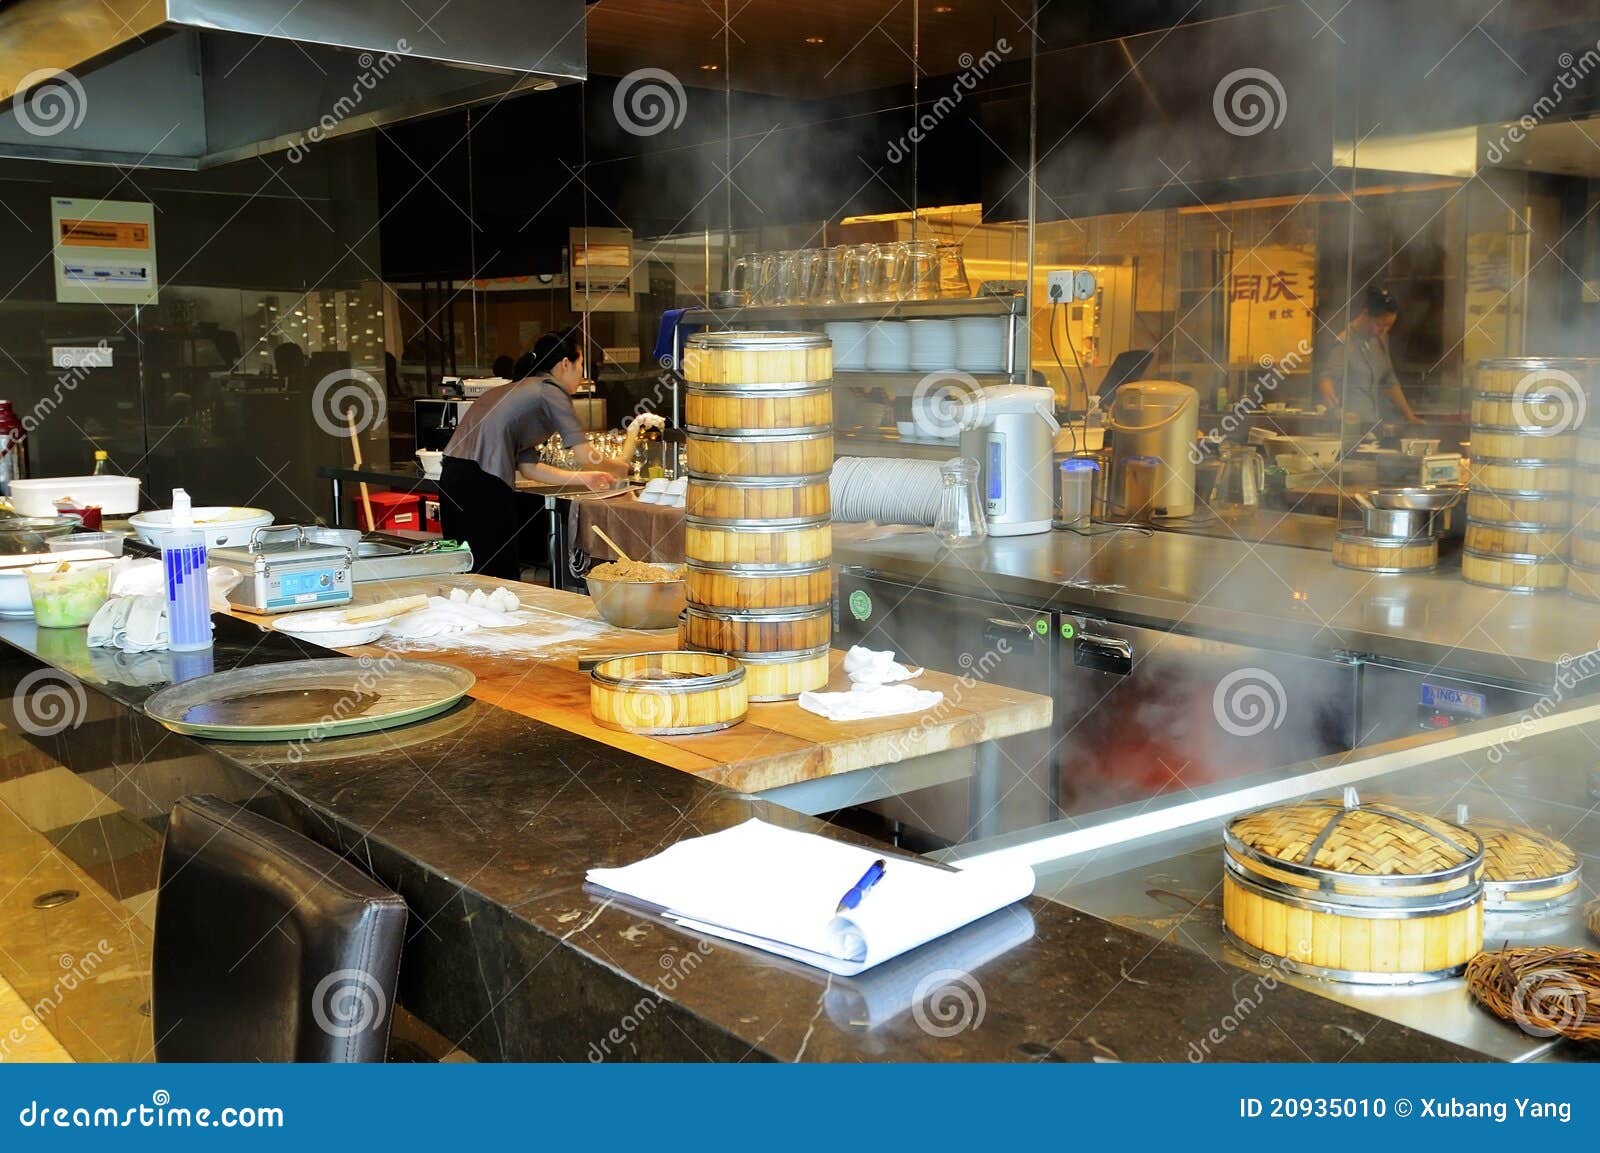 Chinese Restaurant Kitchen Editorial Image - Image: 20935010